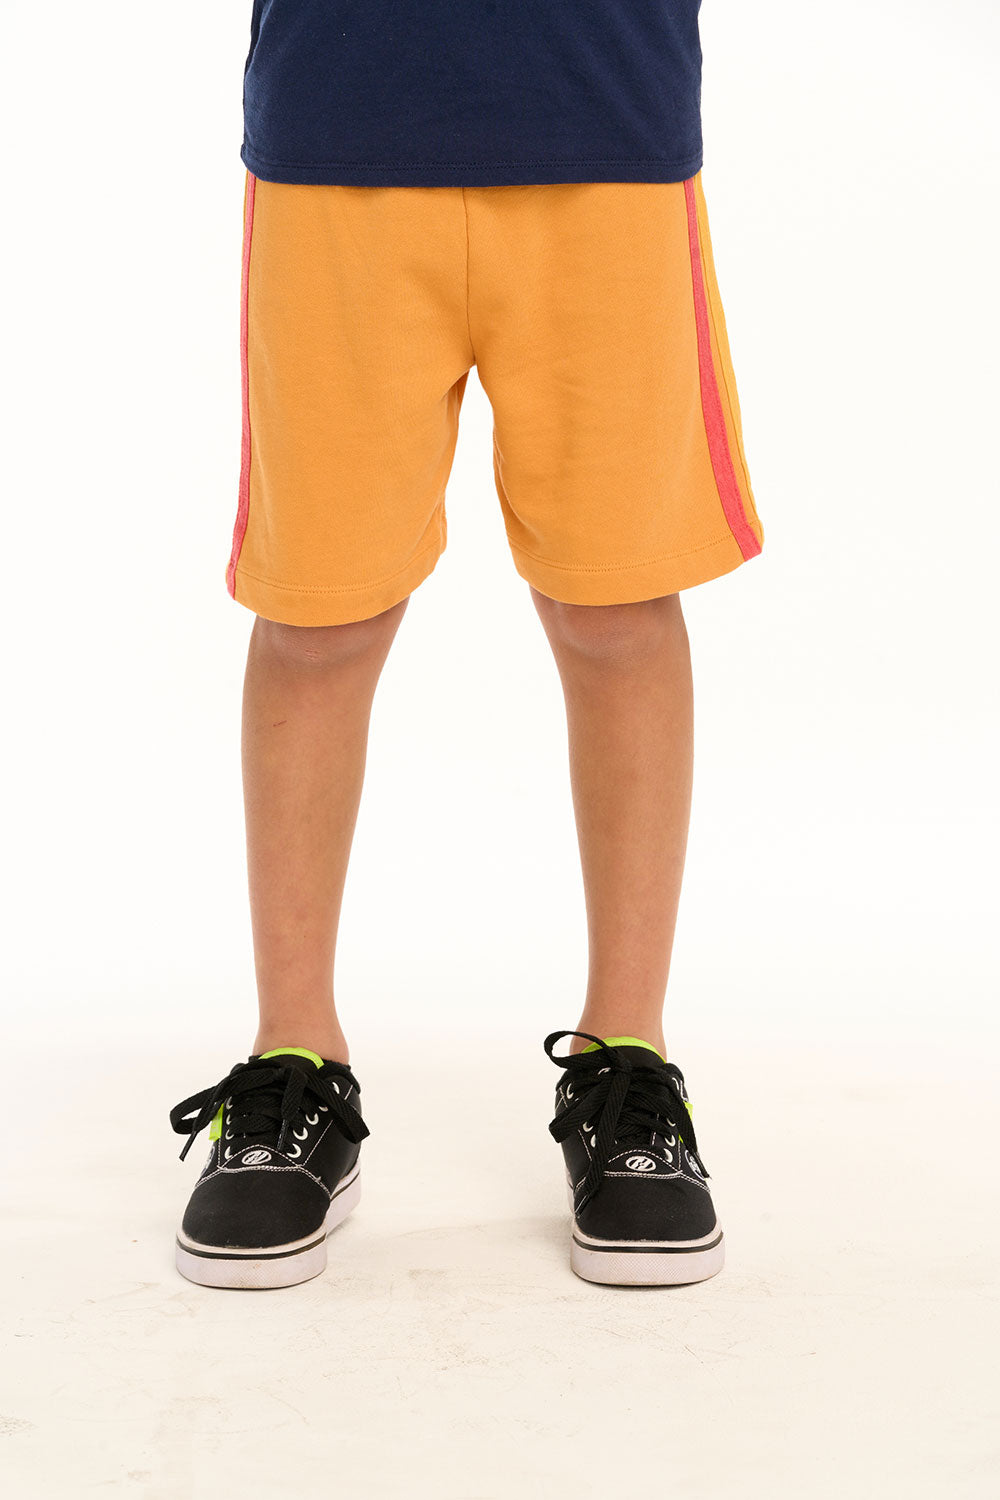 Chaser Socal Stripe Shorts